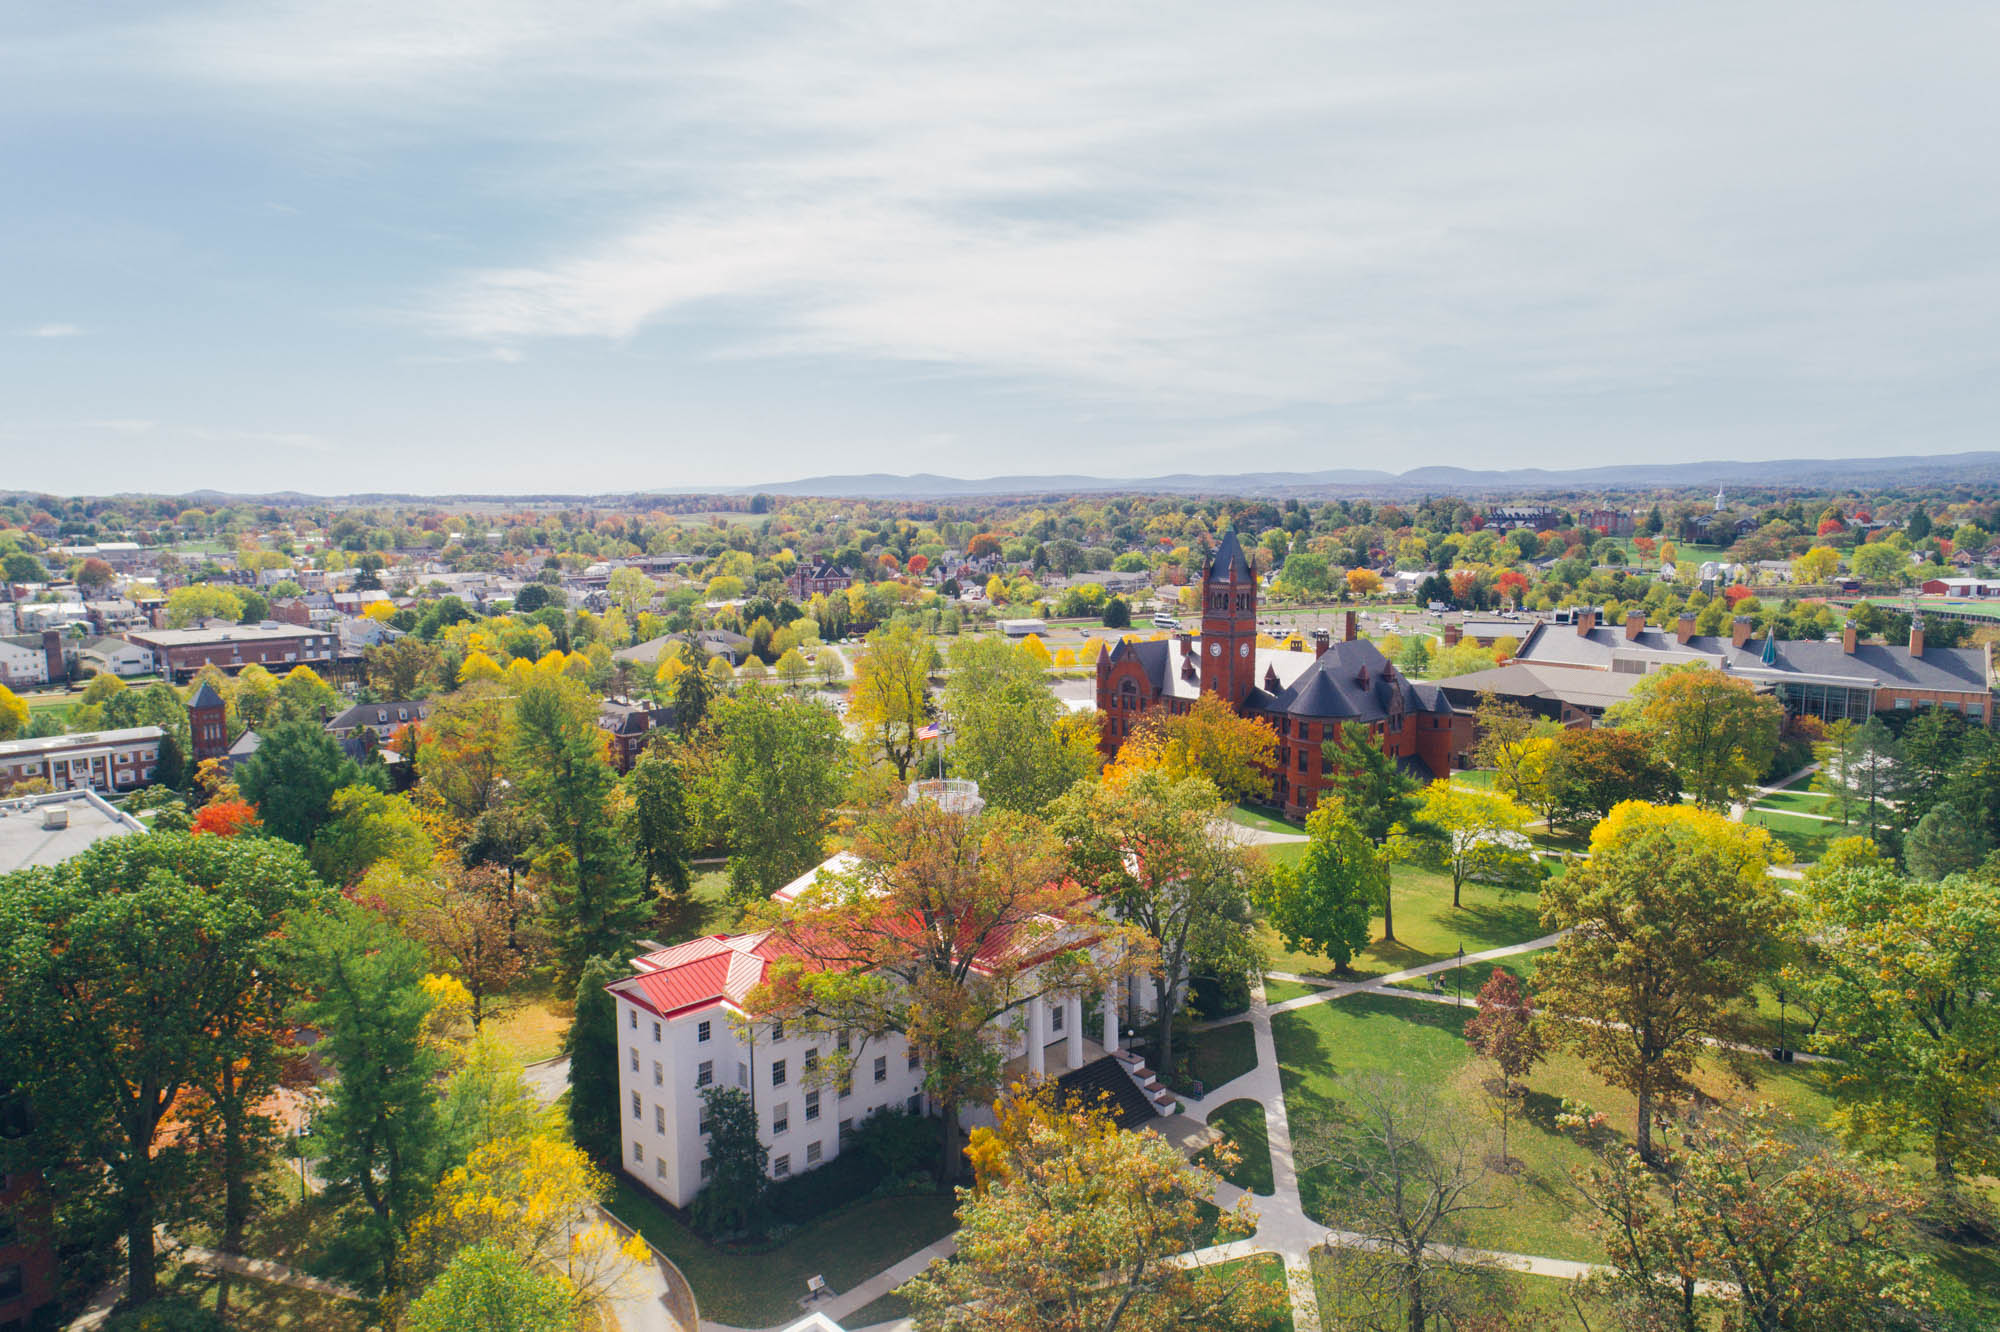 Aerial photo of Gettysburg College in autumn foliage